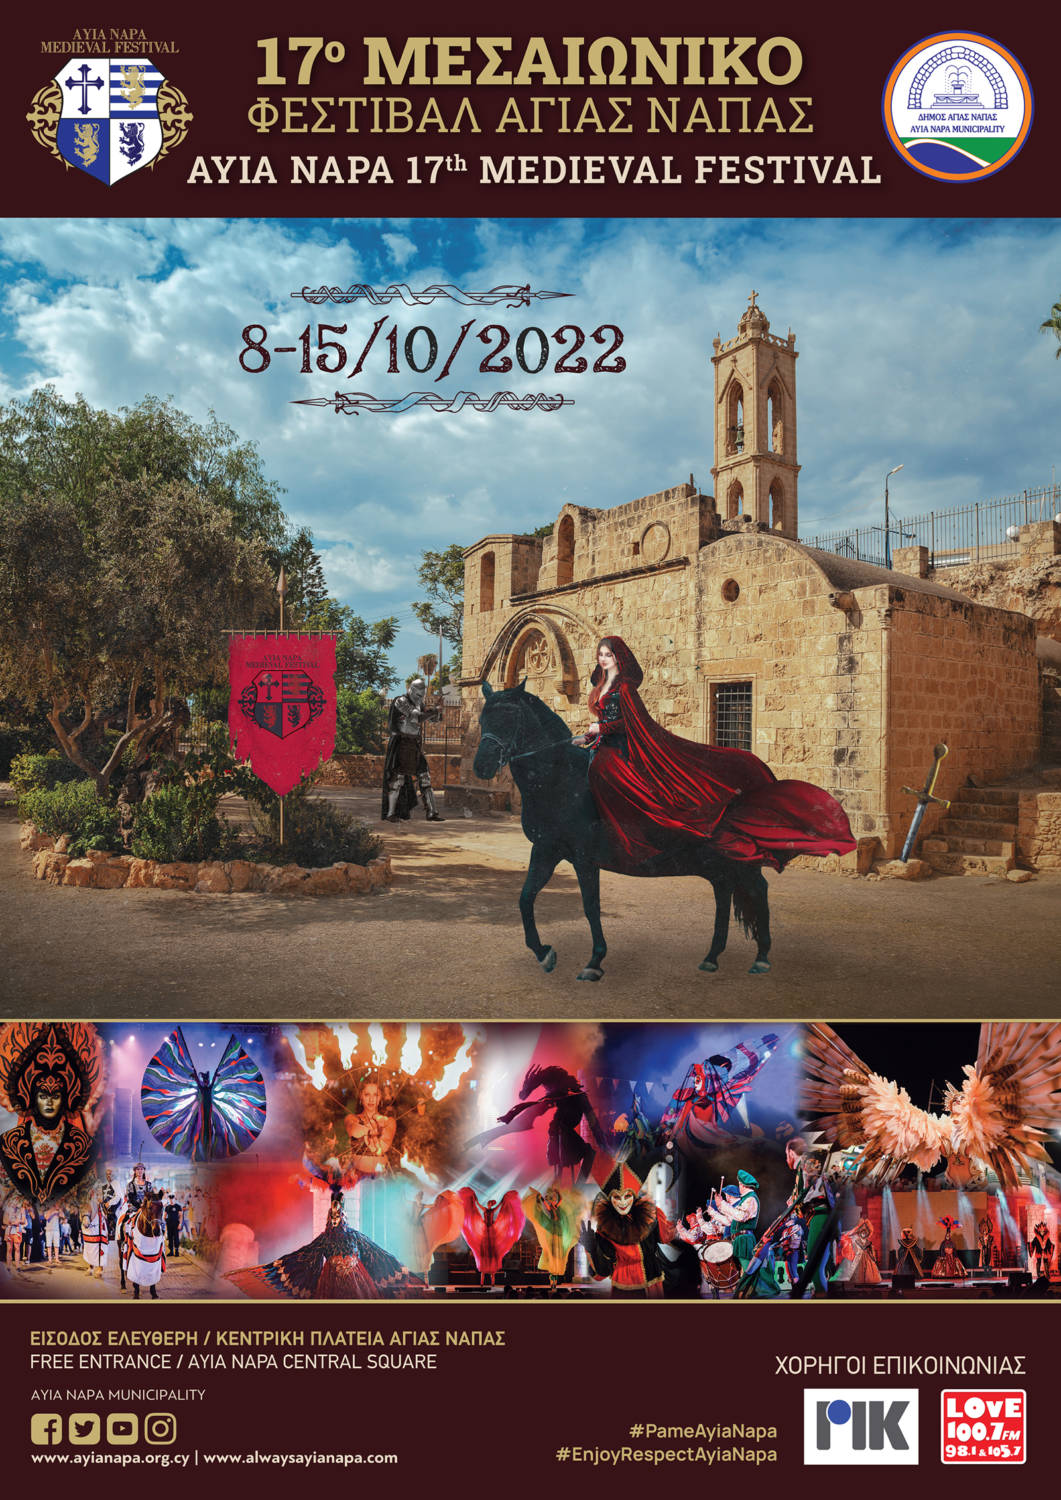 Medieval Festival Poster 2022